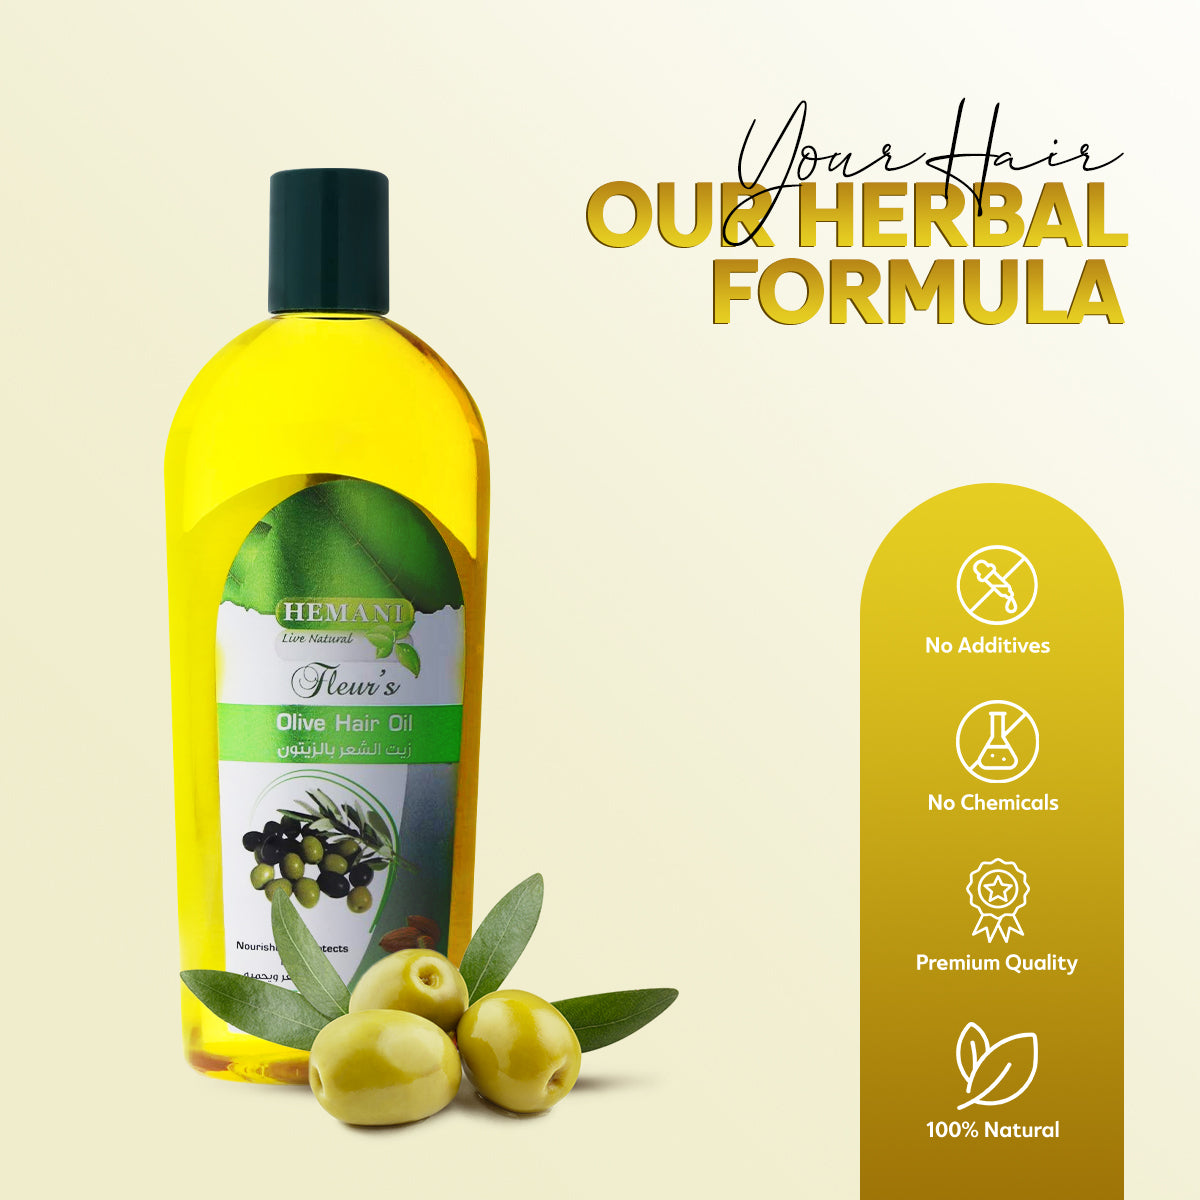 HEMANI Hair Oil Olive 200mL